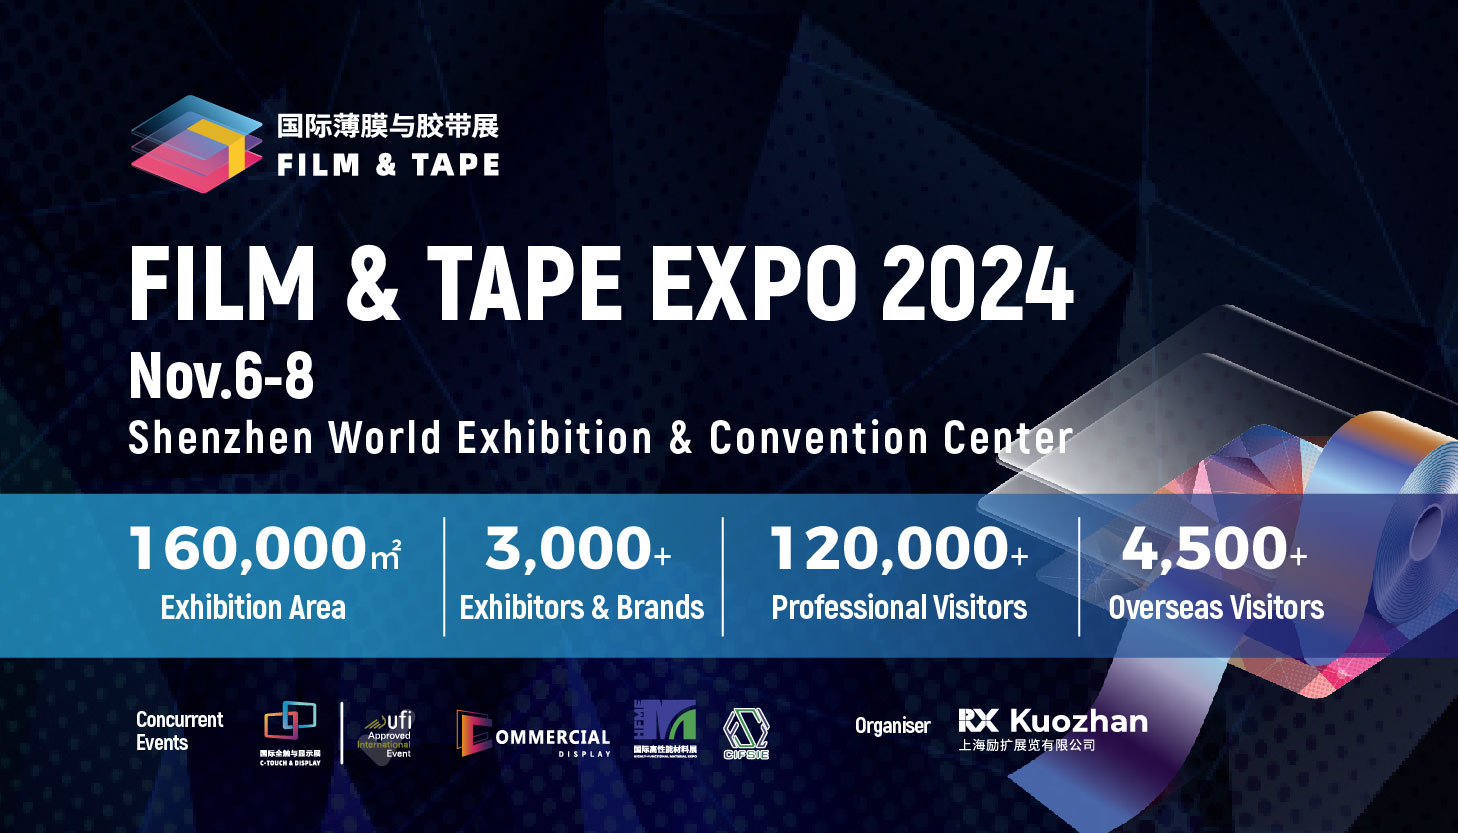 Film & Tape Expo 2024, Shenzhen, Guangdong, China